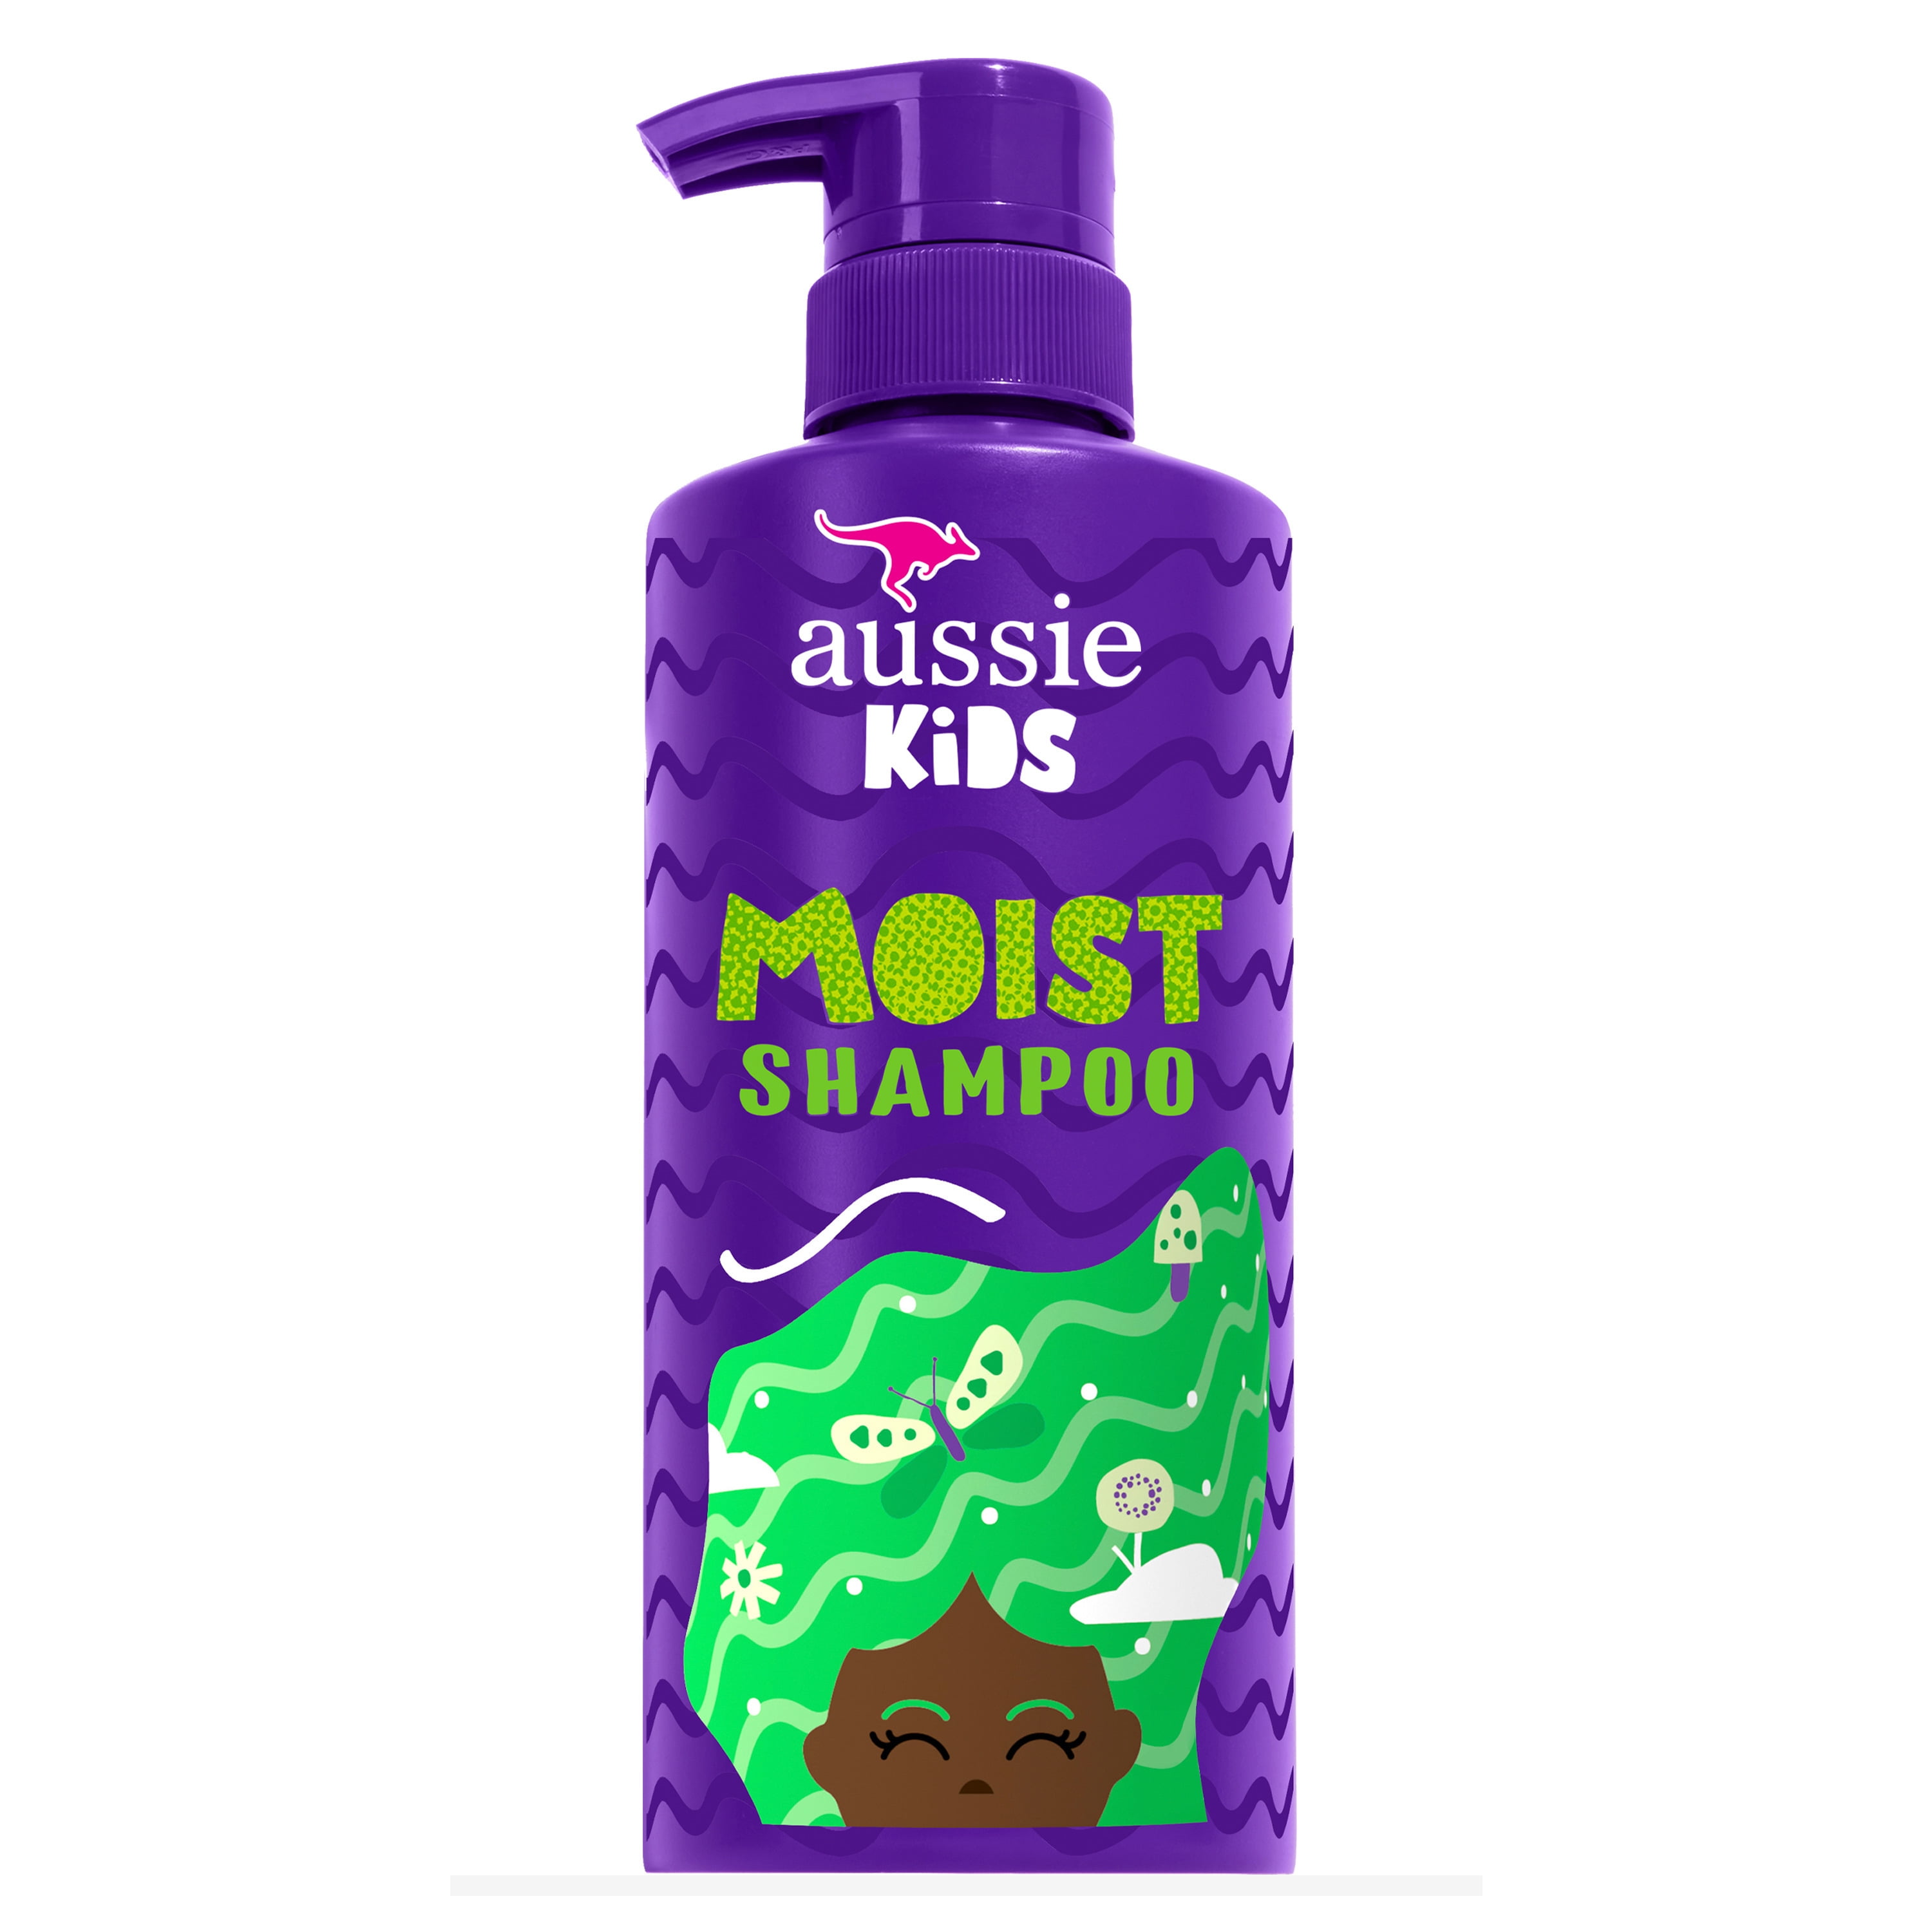 Aussie Kids Shampoo, Moisturizes Hair, Sulfate Free, 16oz